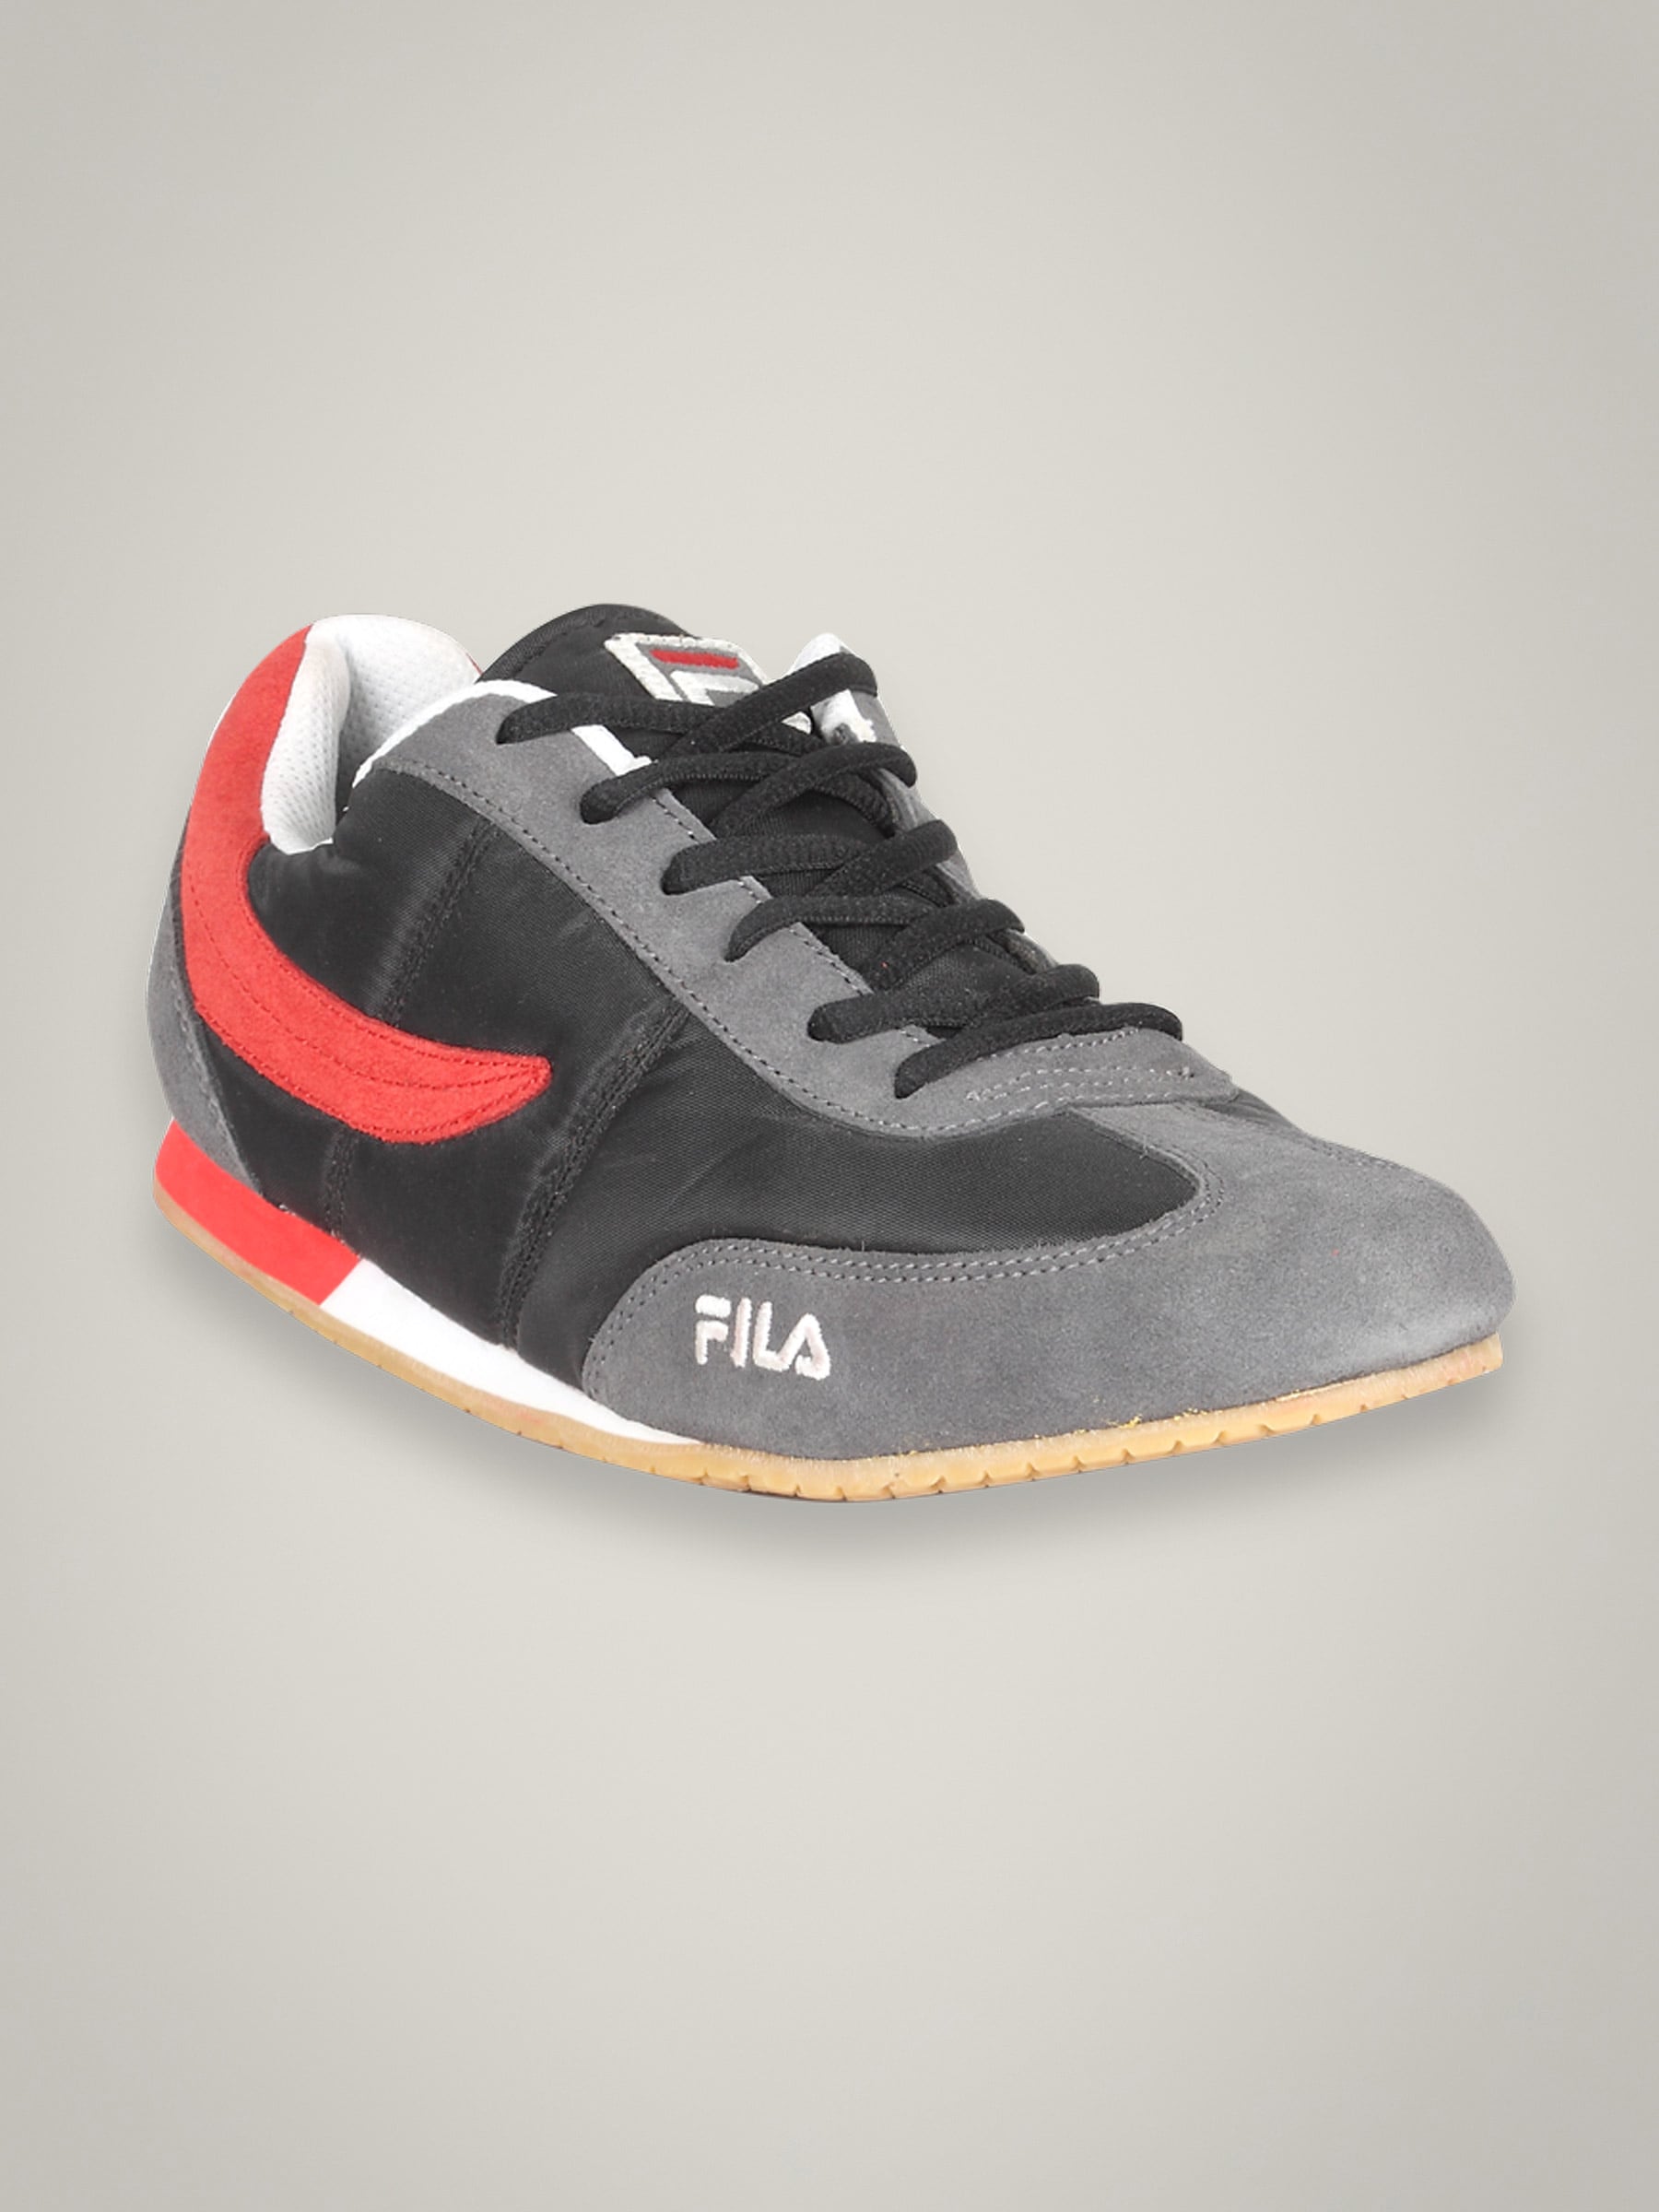 Fila Men's Montello Grey Black Red Shoe